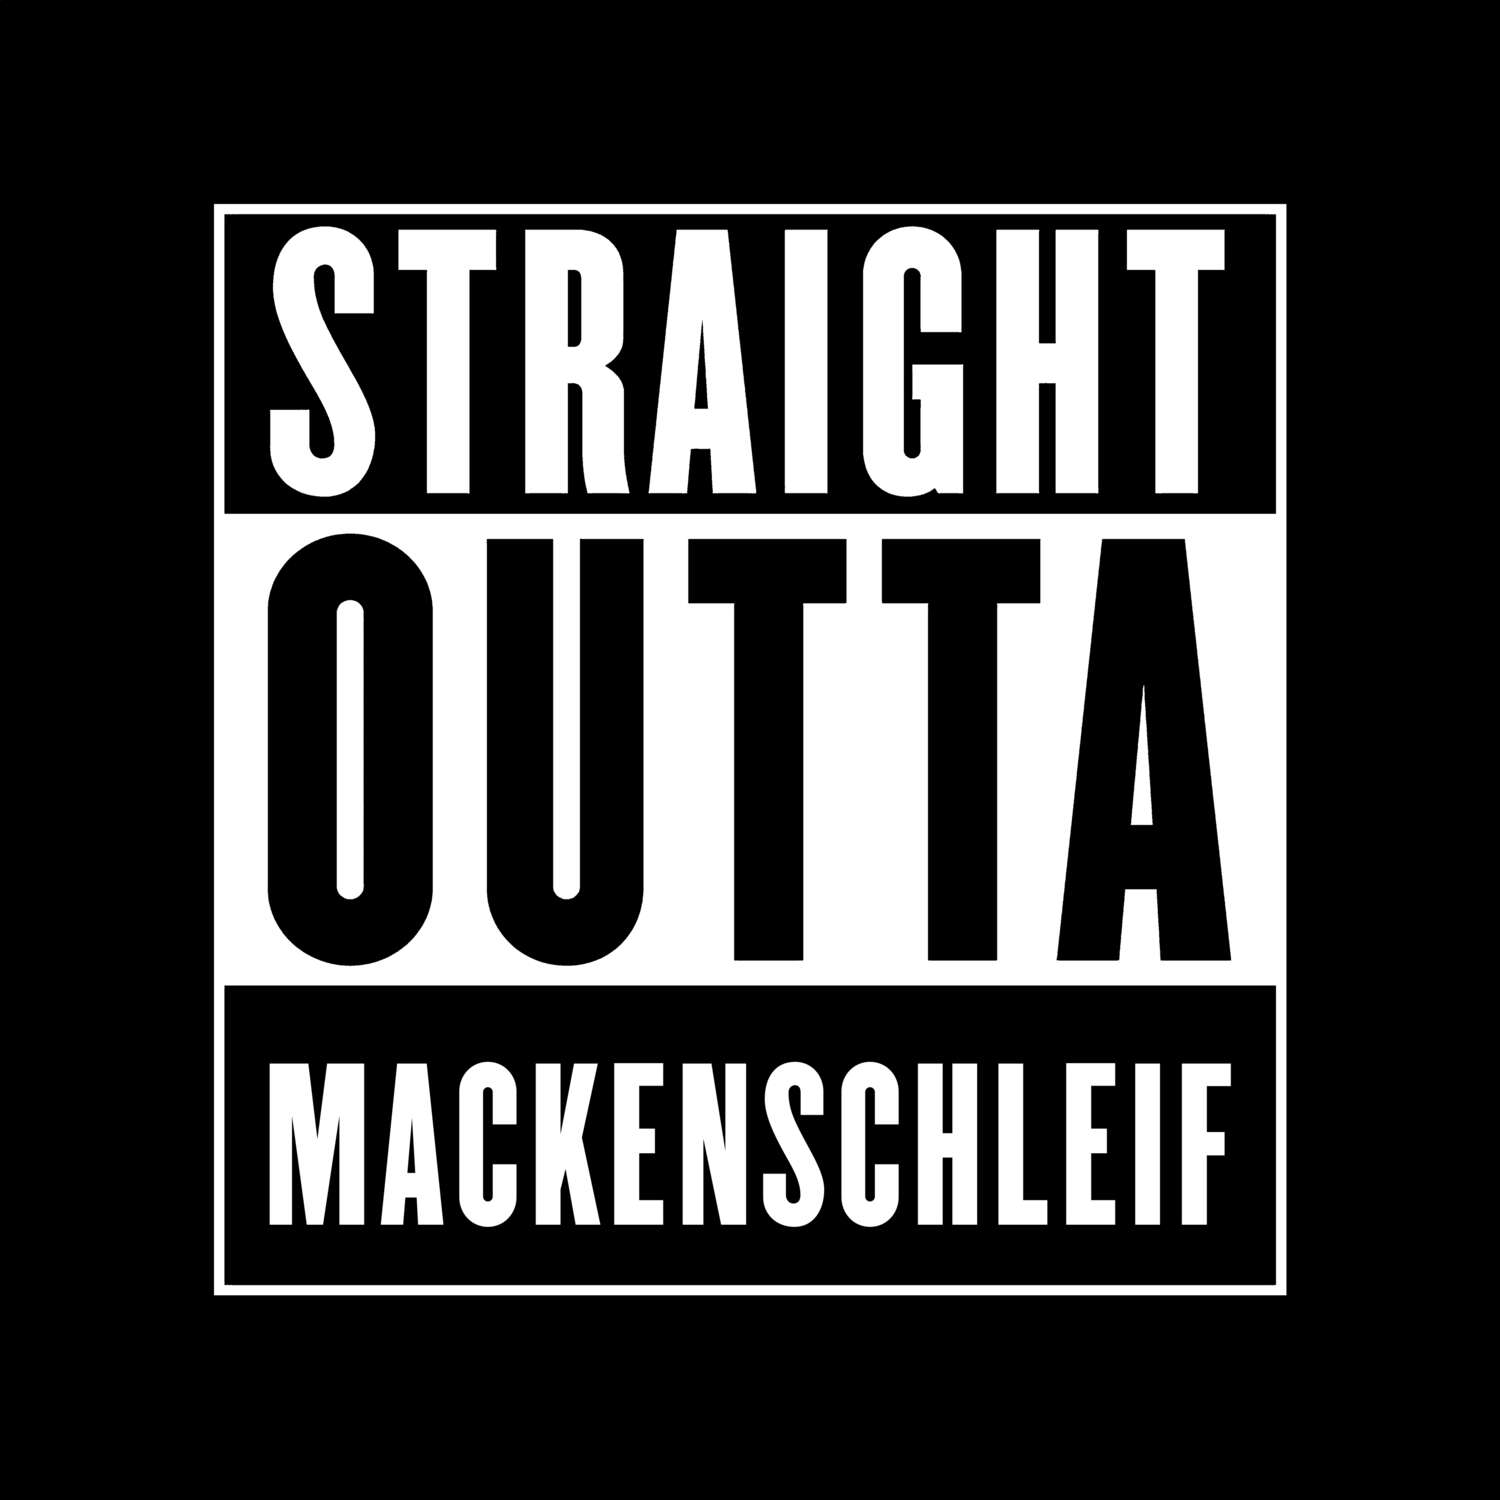 Mackenschleif T-Shirt »Straight Outta«